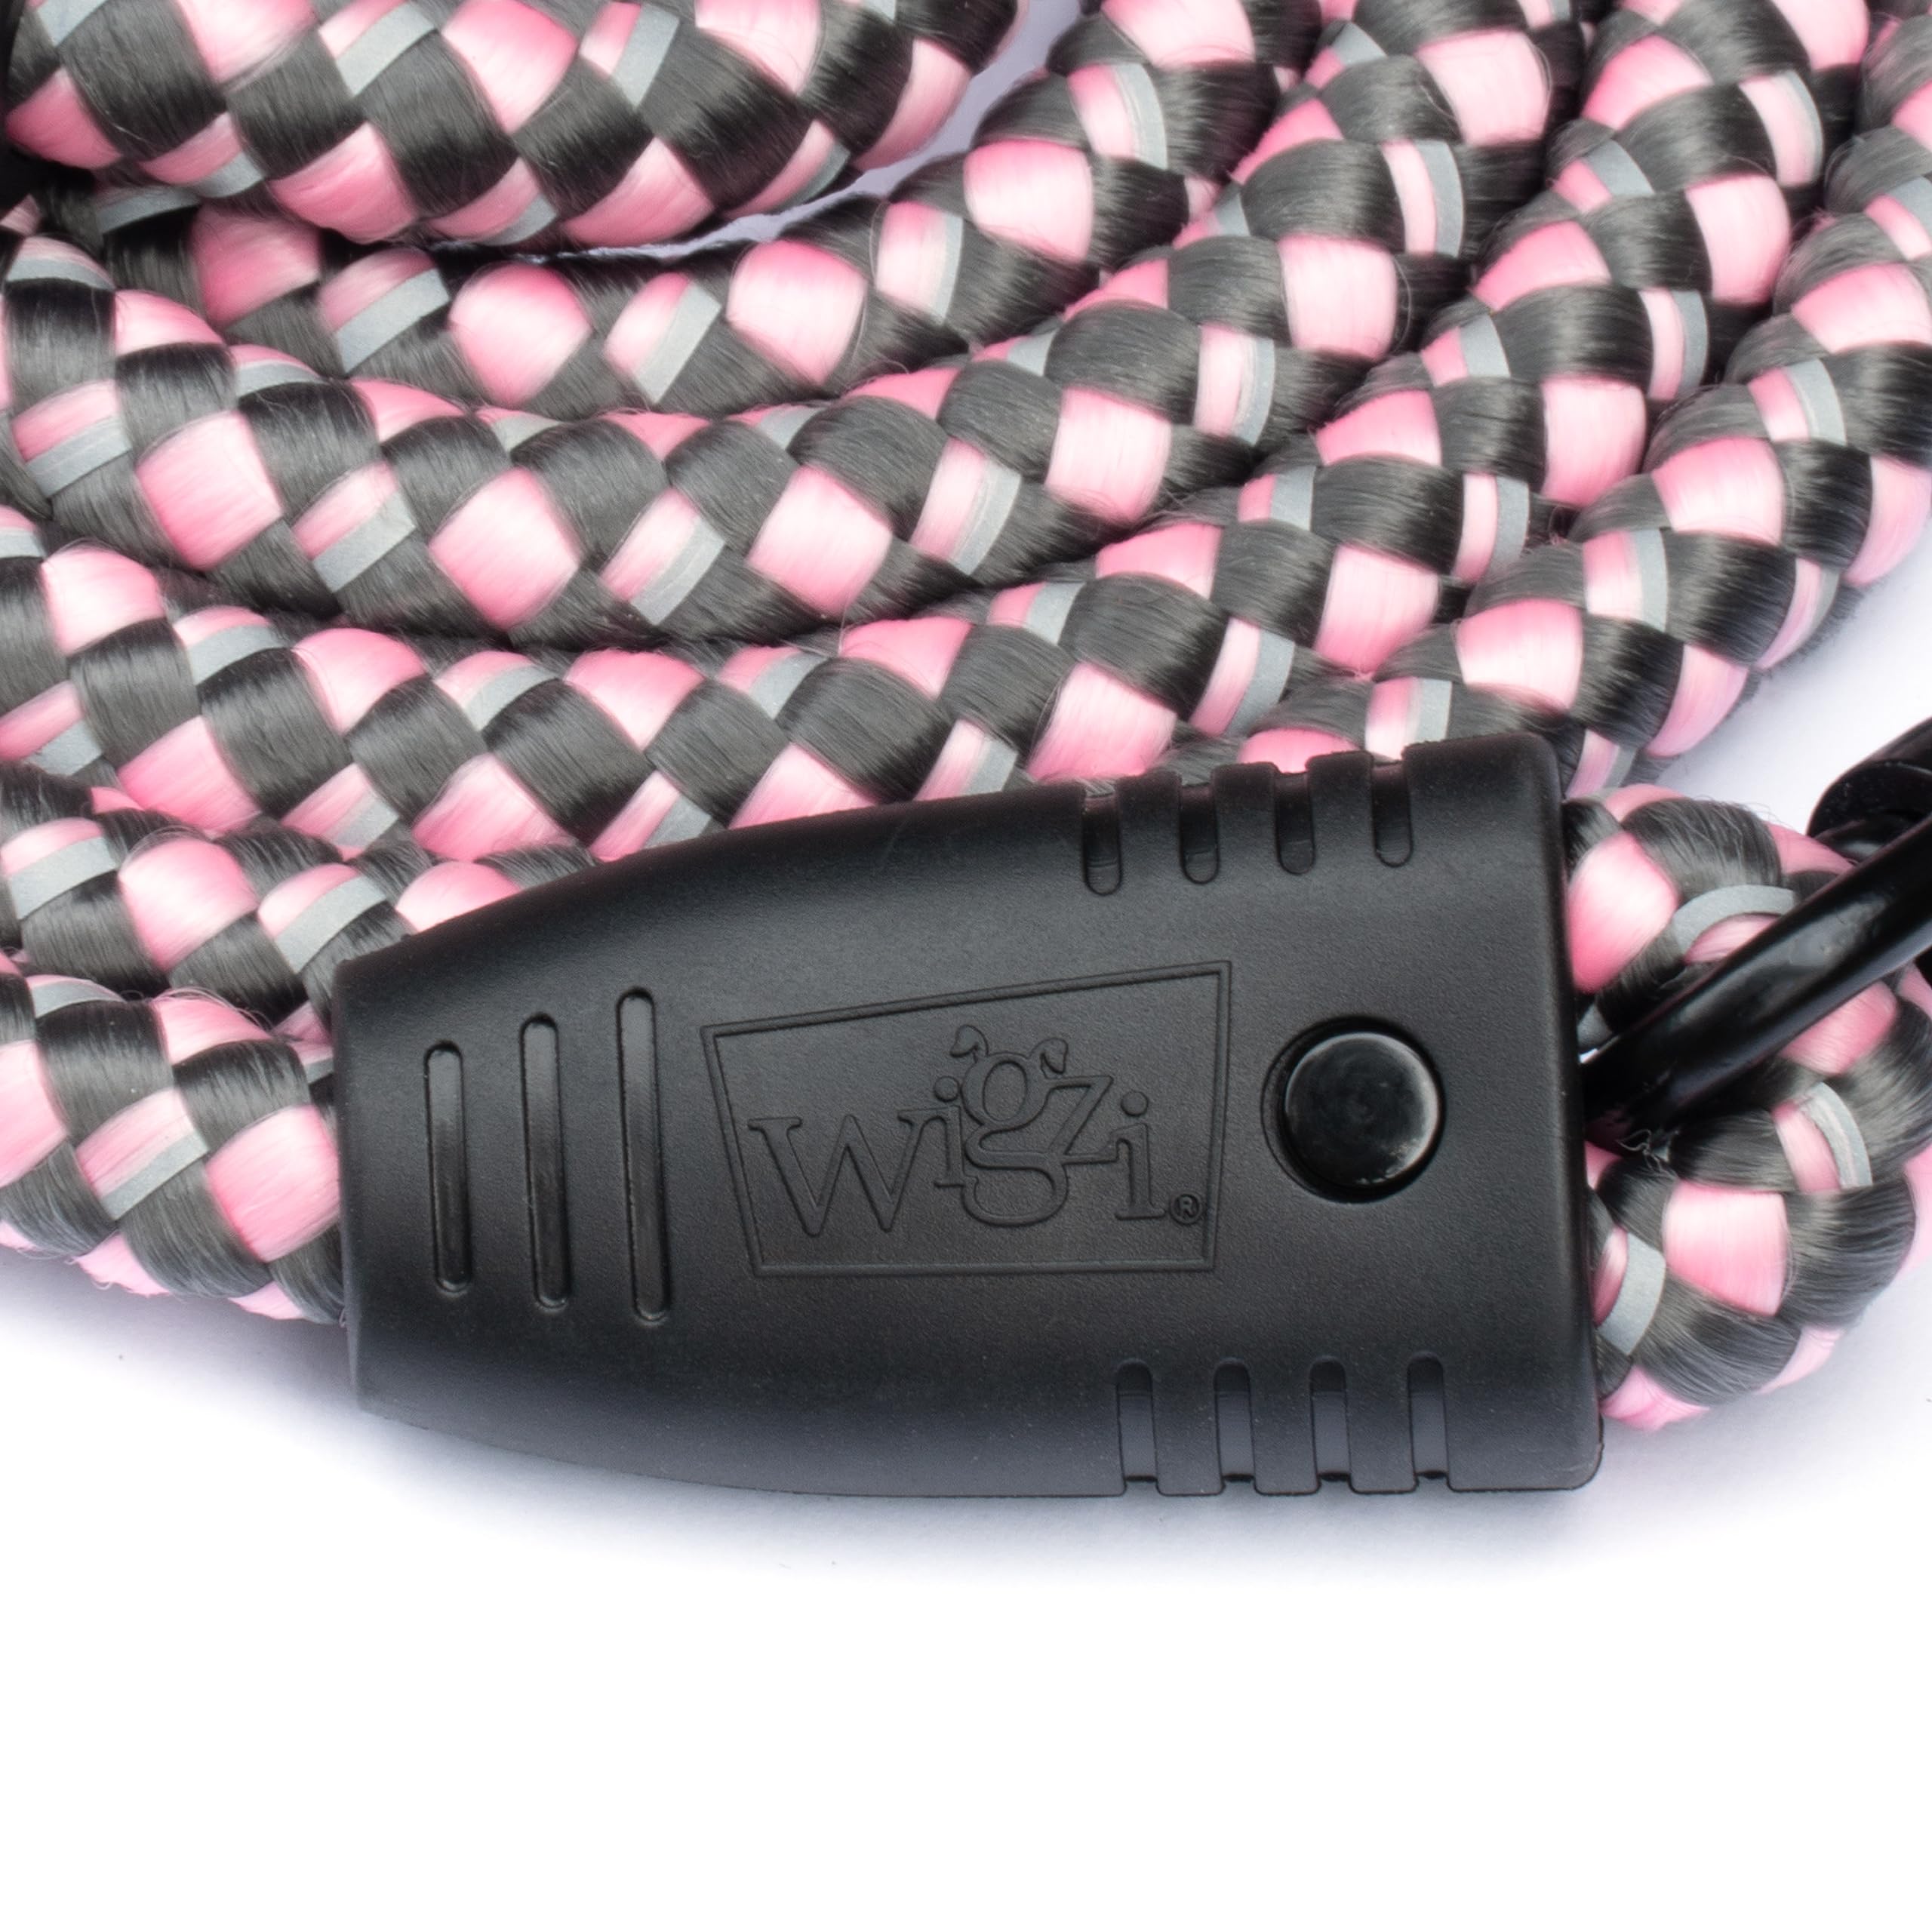 Wigzi Flex Walk Reflective Bungi Cable Dog Leash - Pink - 6 Feet  